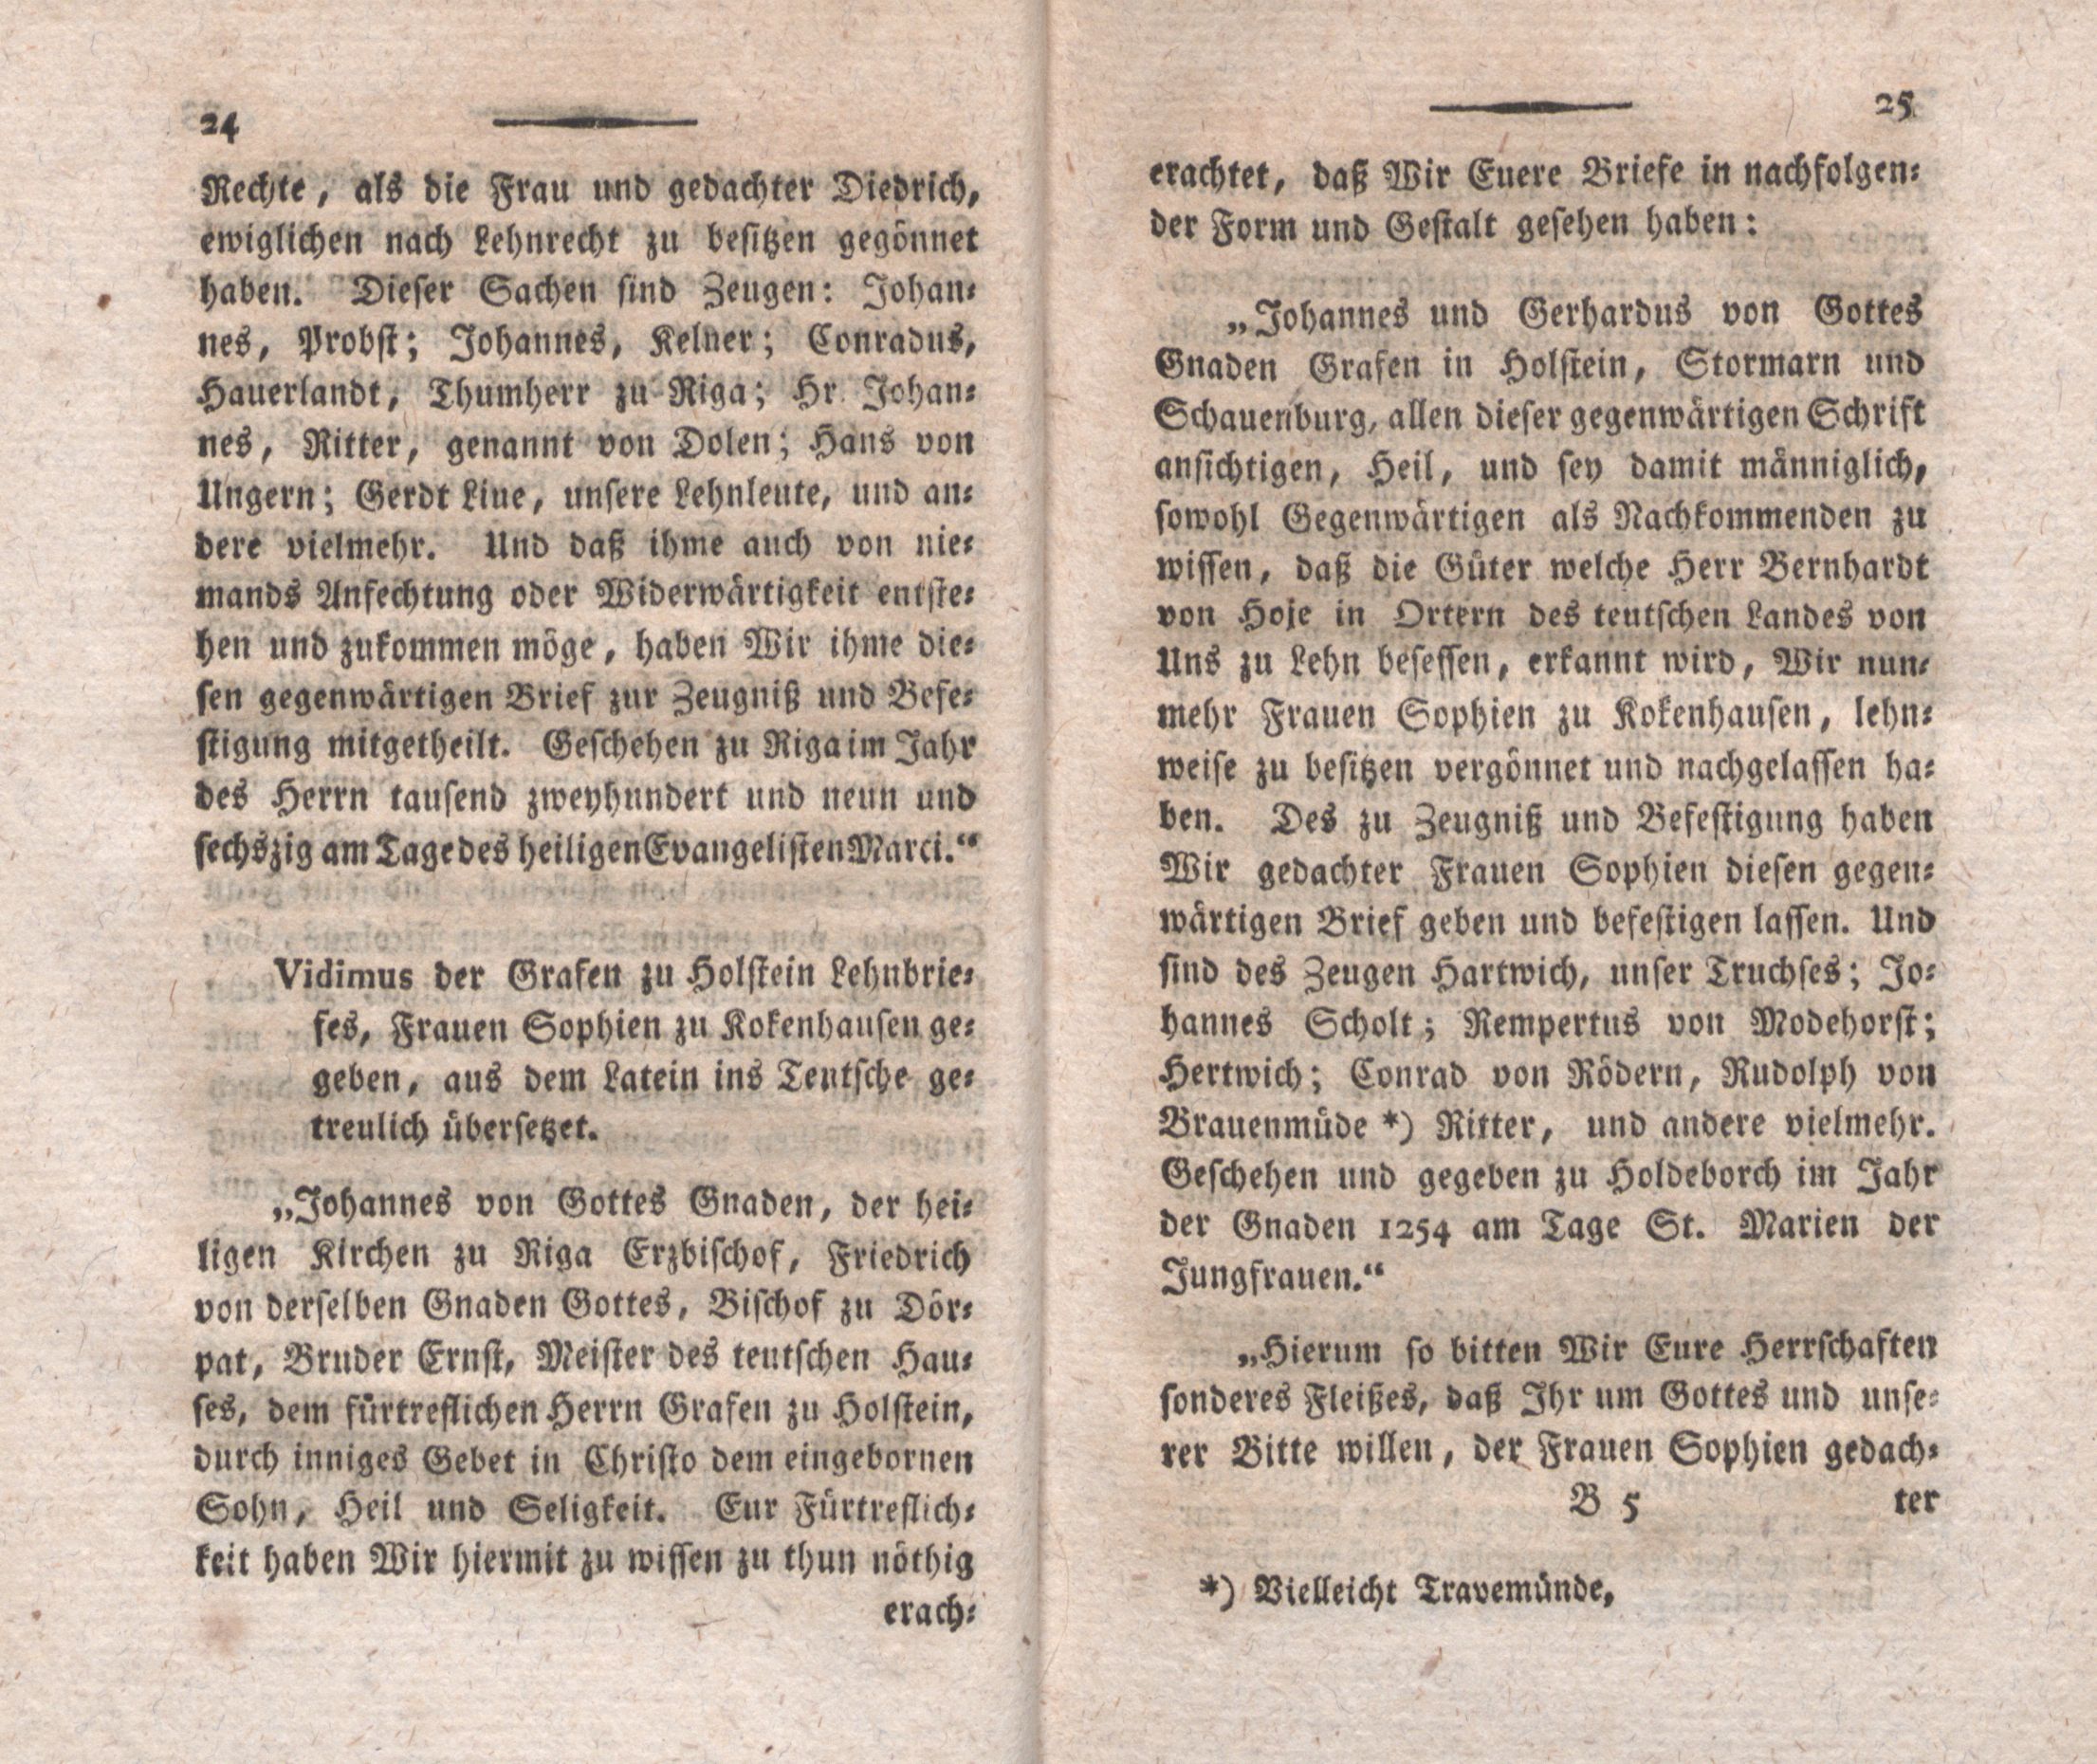 Neue nordische Miscellaneen [18] (1798) | 14. (24-25) Main body of text